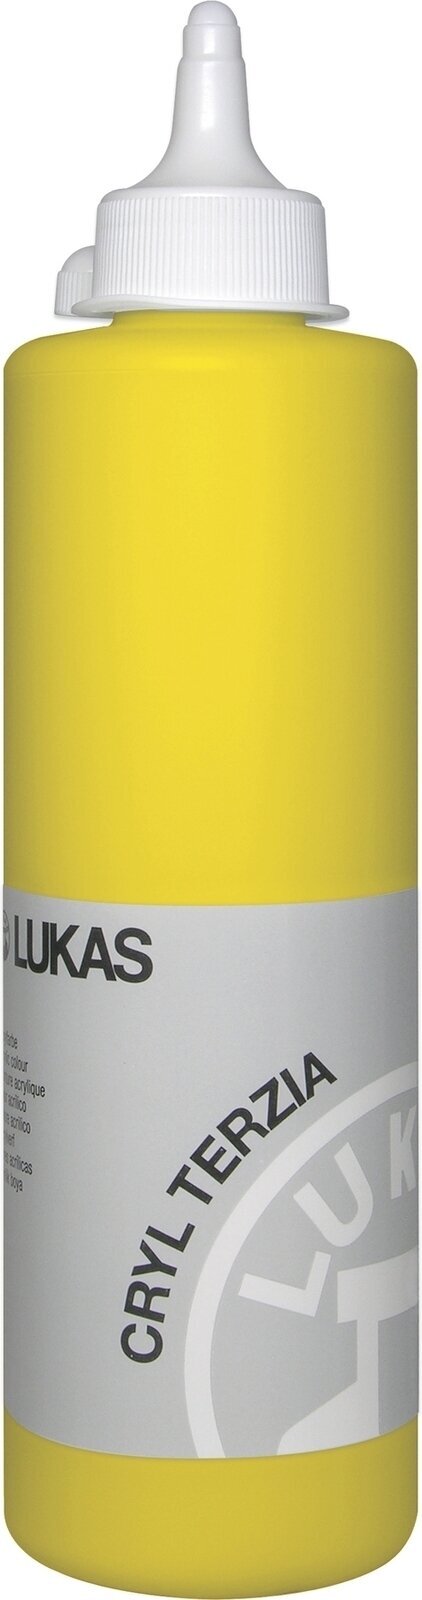 Acrylic Paint Lukas Cryl Terzia Acrylic Paint 500 ml Primary Yellow